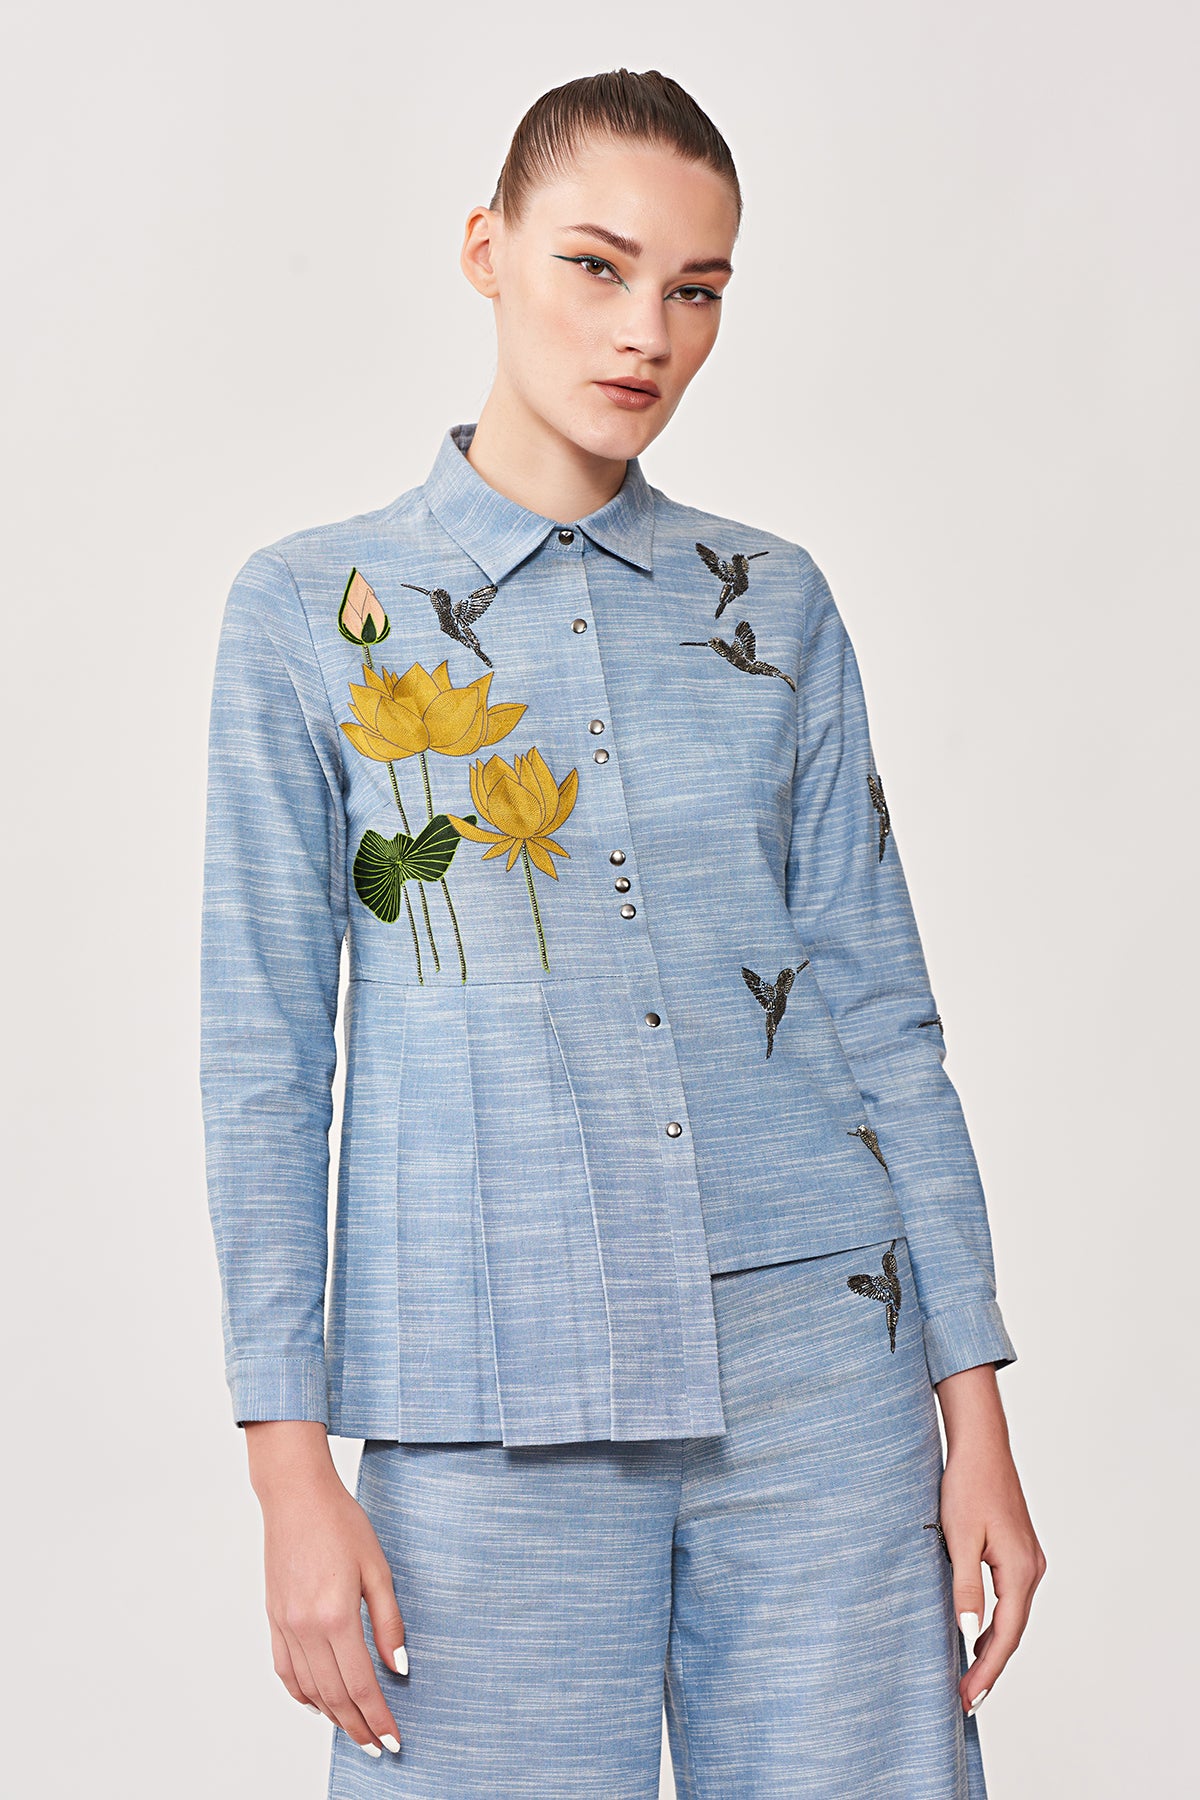 Lotus & Humming Bird Side Pleated Shirt